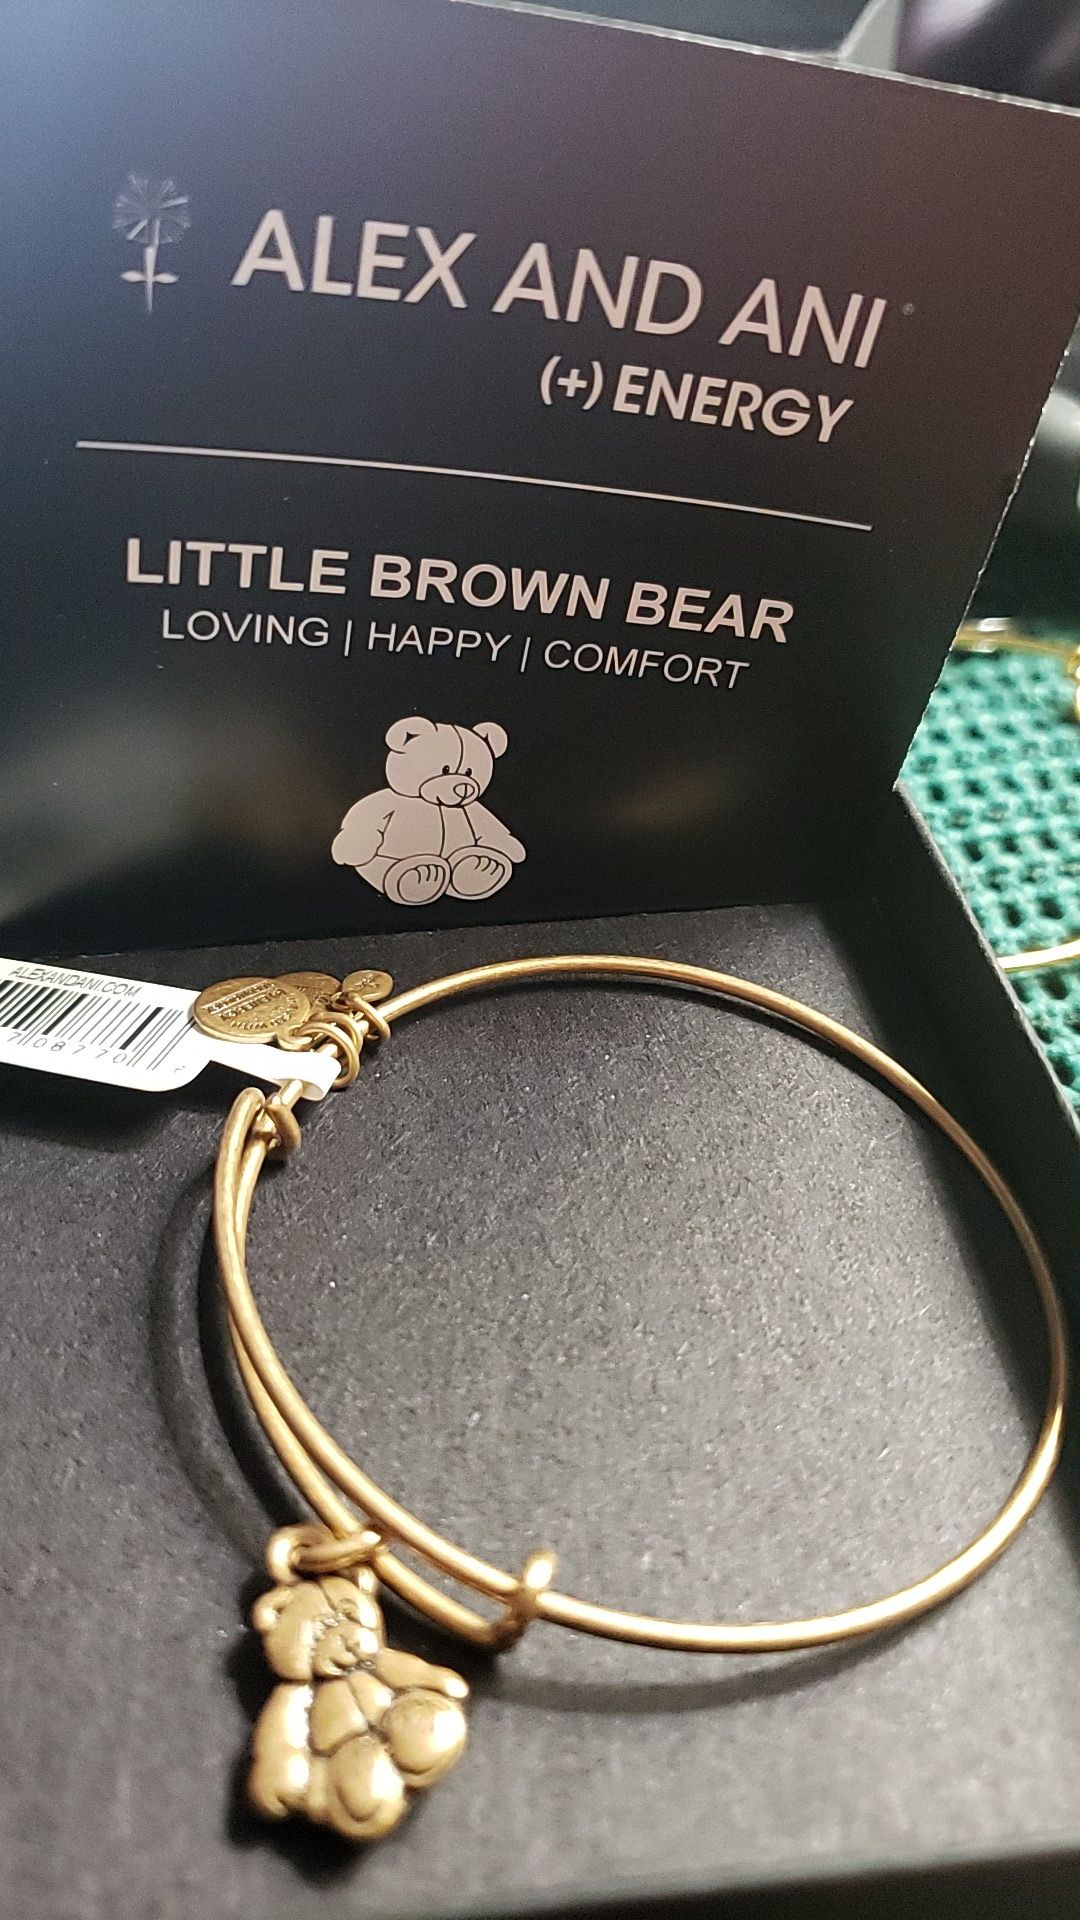 Alex and Ani Little Brown Bear bracelet